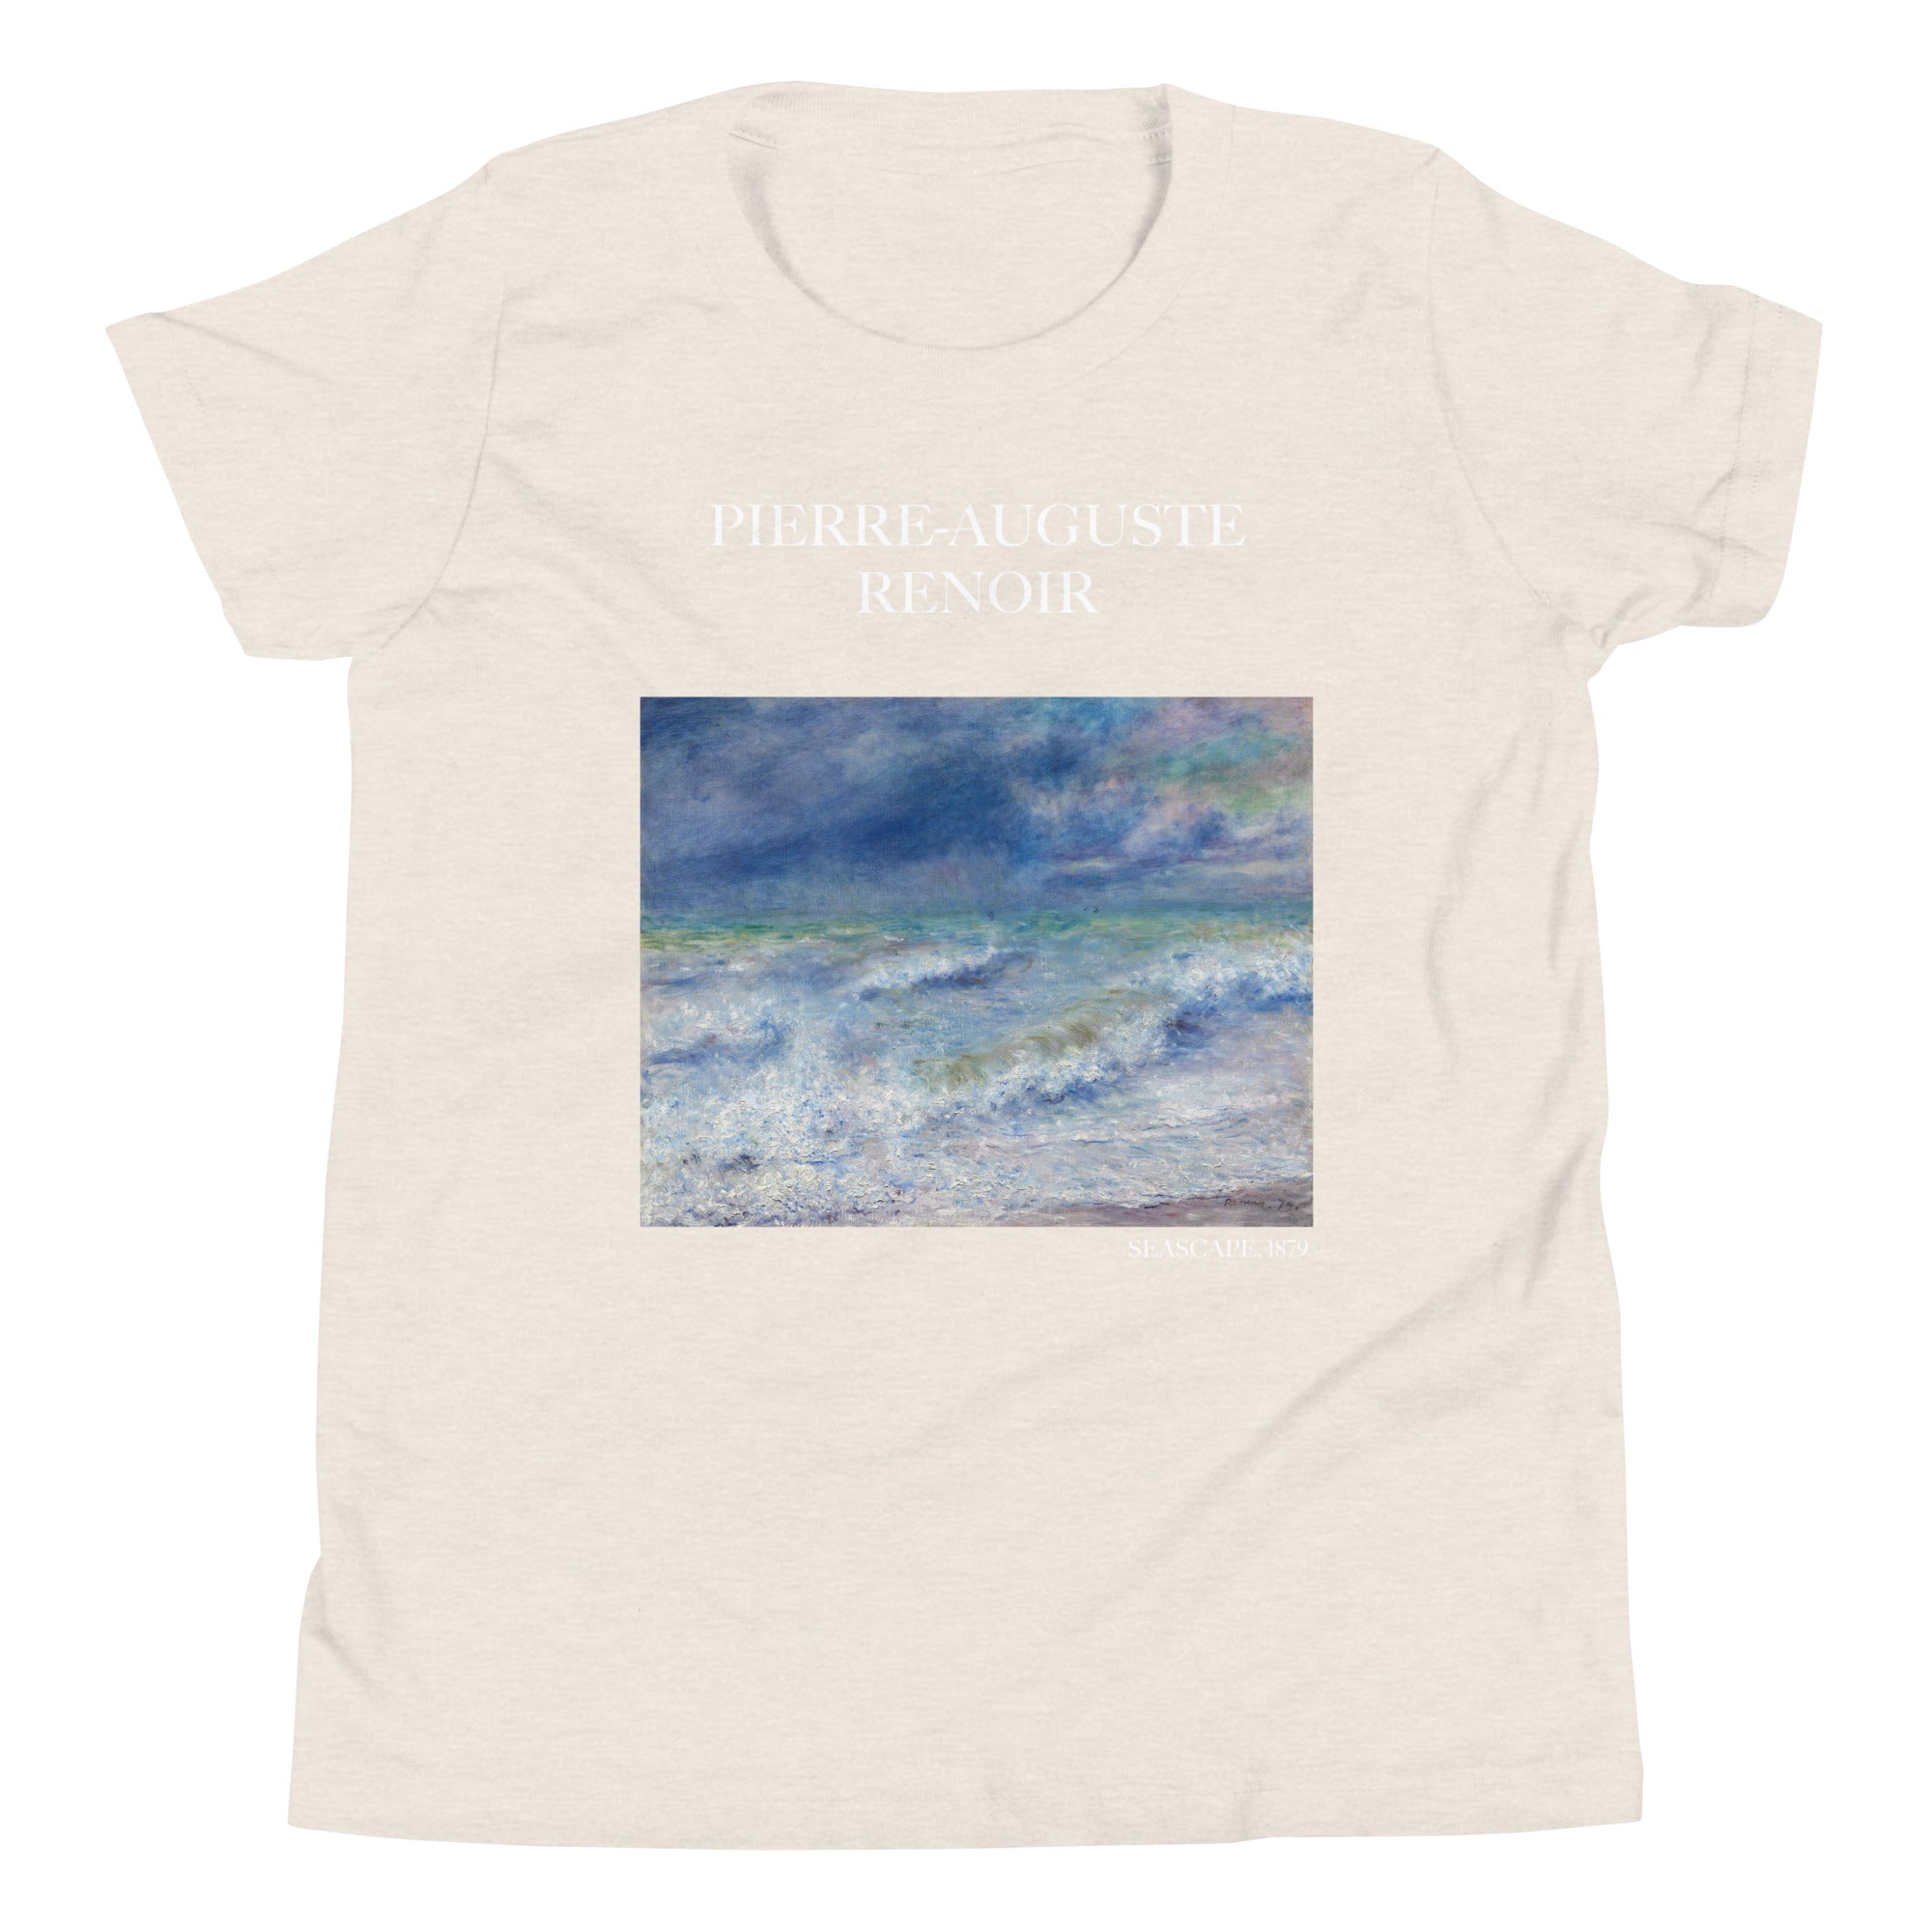 Pierre-Auguste Renoir 'Seascape' Famous Painting Short Sleeve T-Shirt | Premium Youth Art Tee